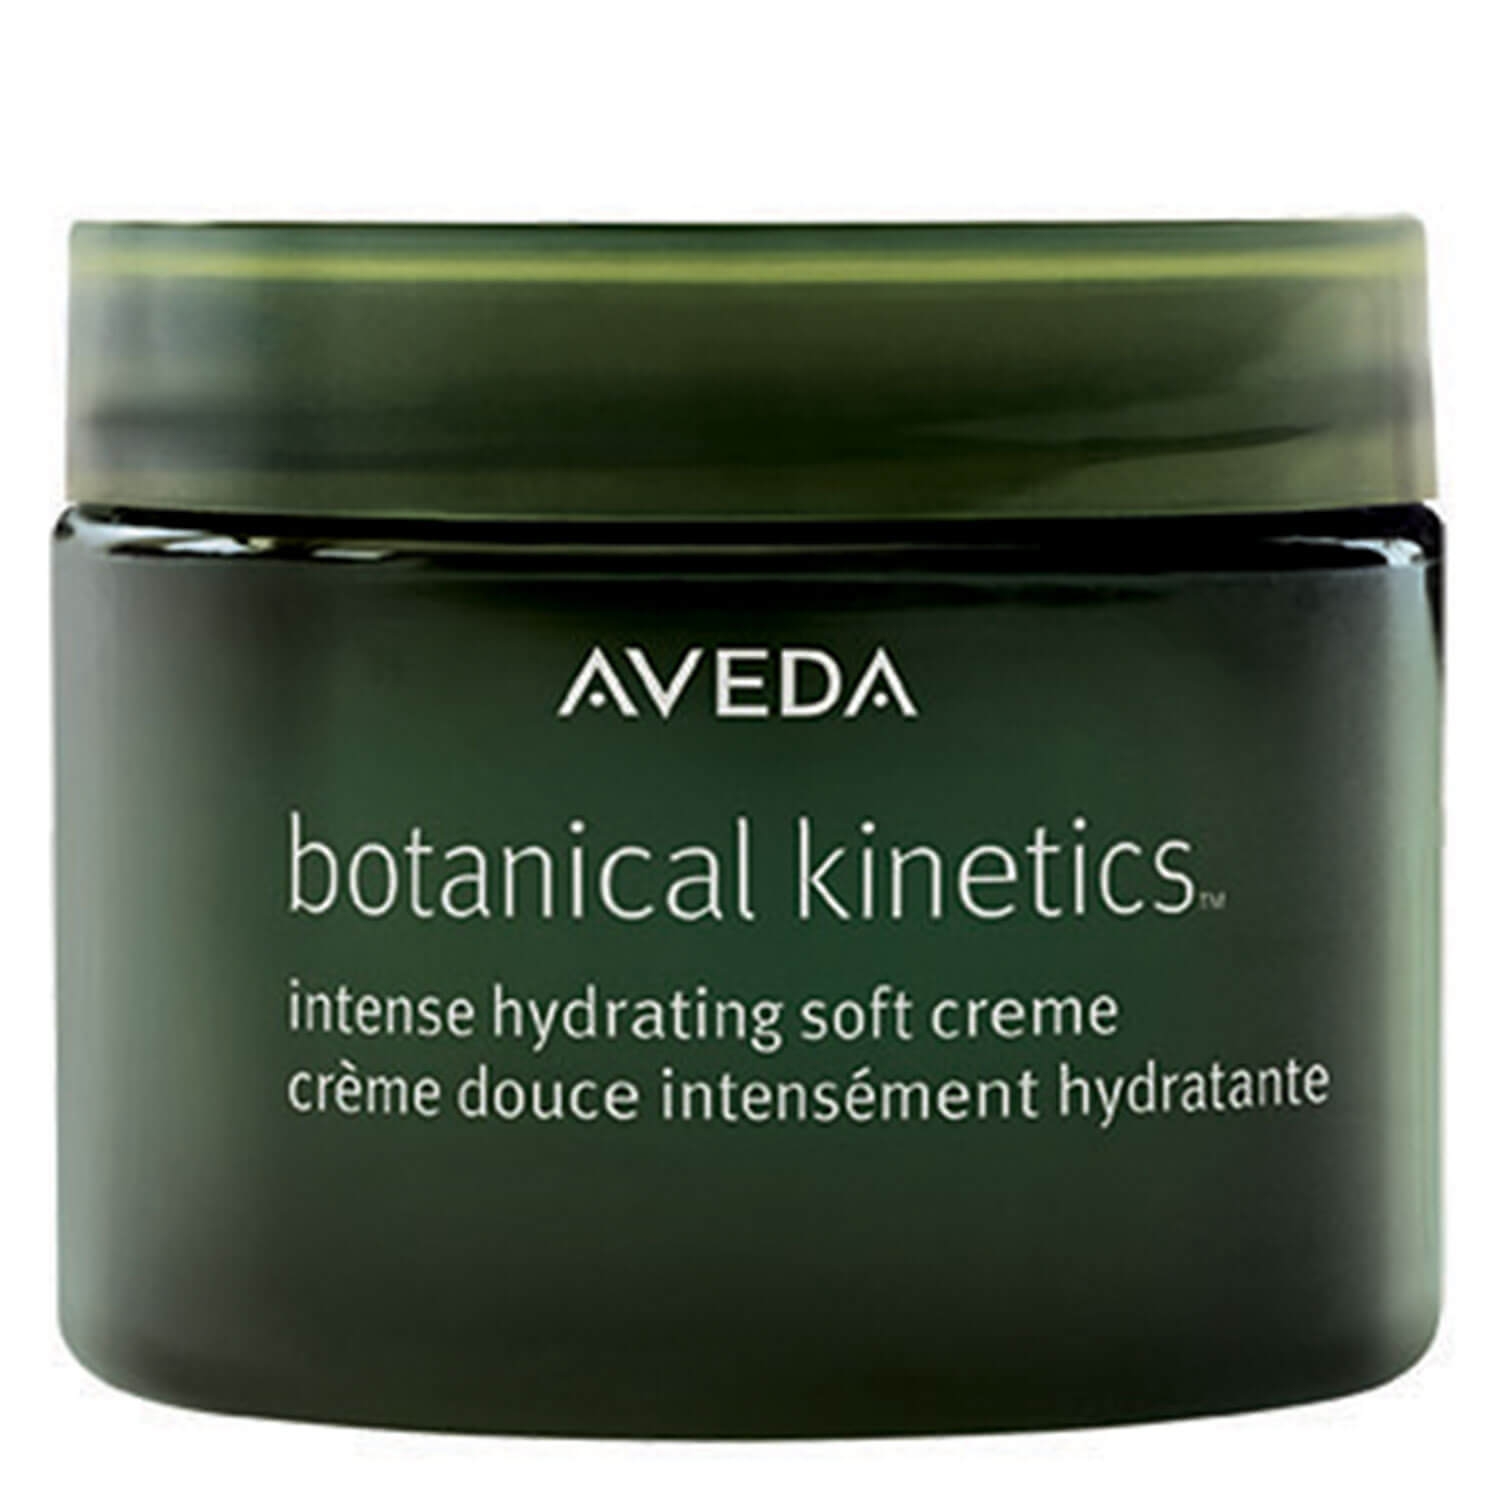 Produktbild von botanical kinetics - intense hydrating soft creme